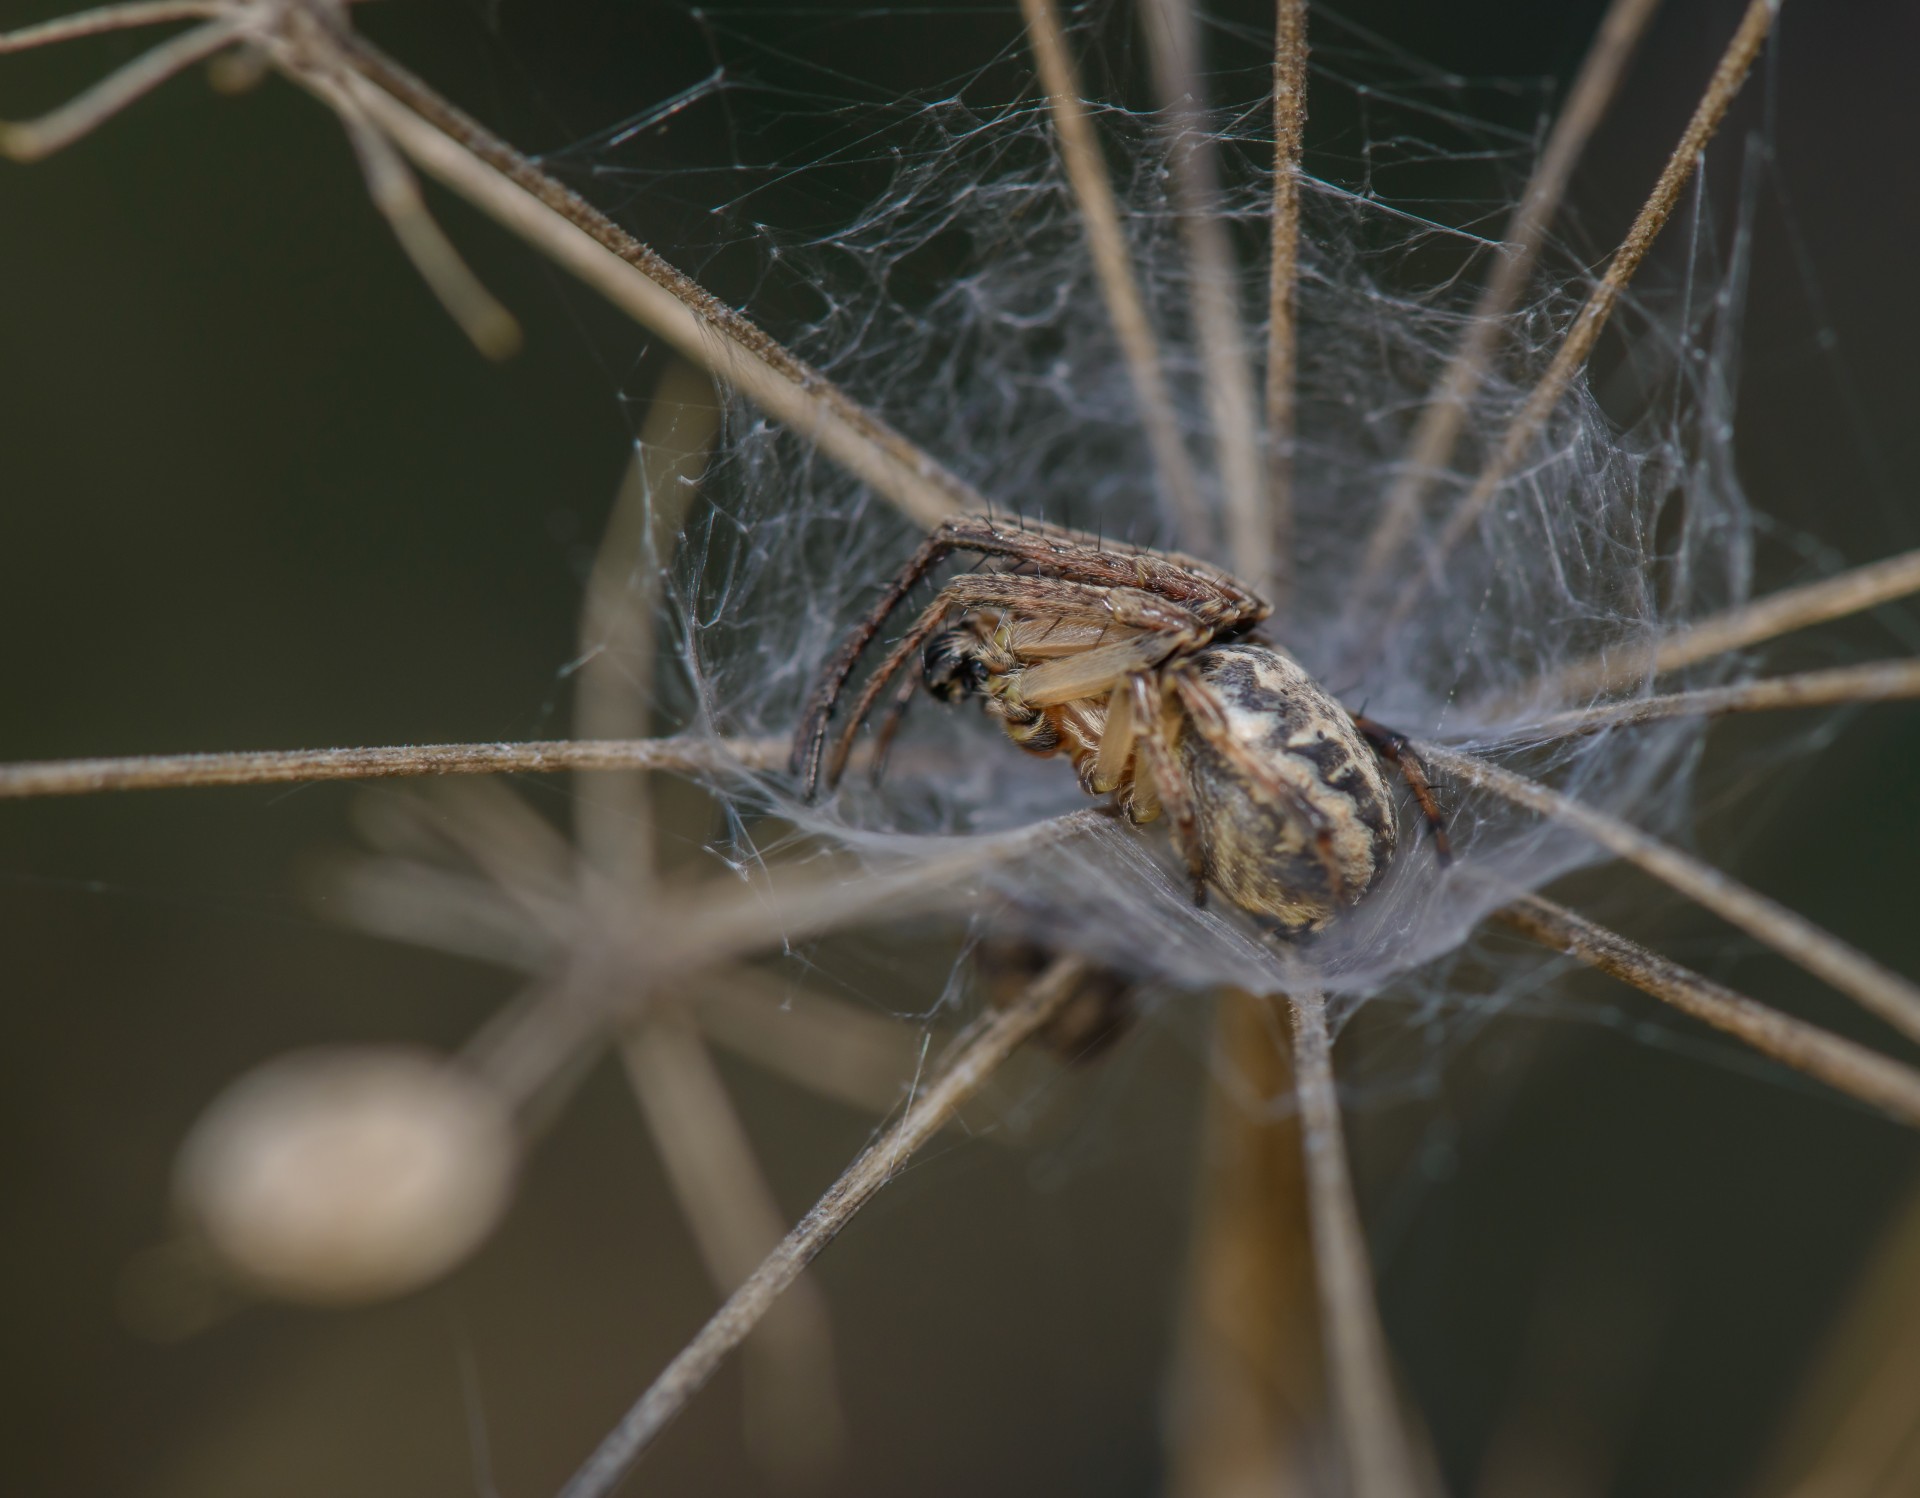 Среда жизни пауков